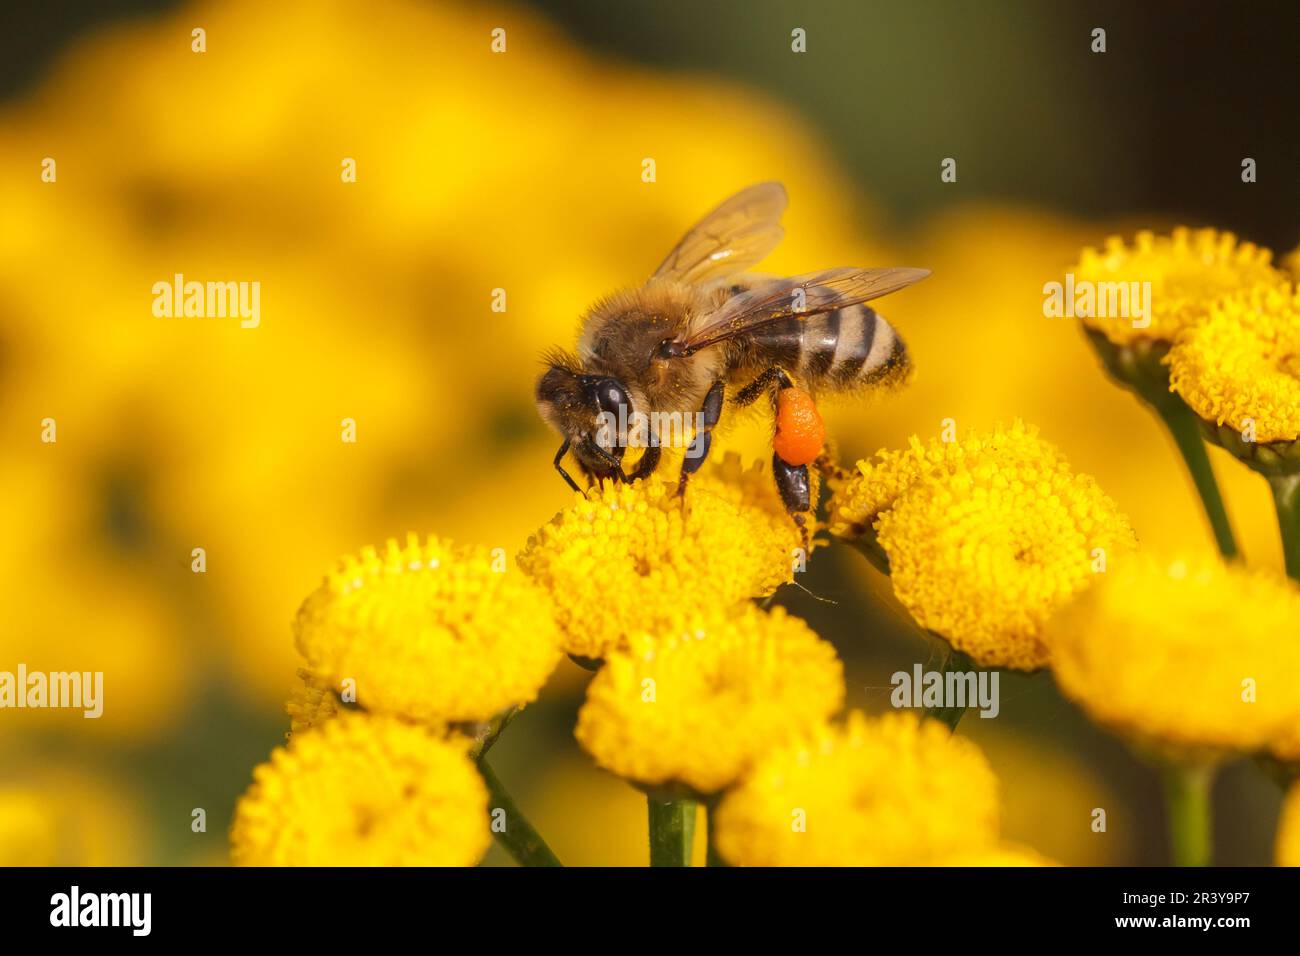 Apis mellifera, Europäische Honigbiene (Westliche Honigbiene), Biene, Honigbiene - Apis mellifera, known as Honeybee (Western honeybee), European hone Stock Photo